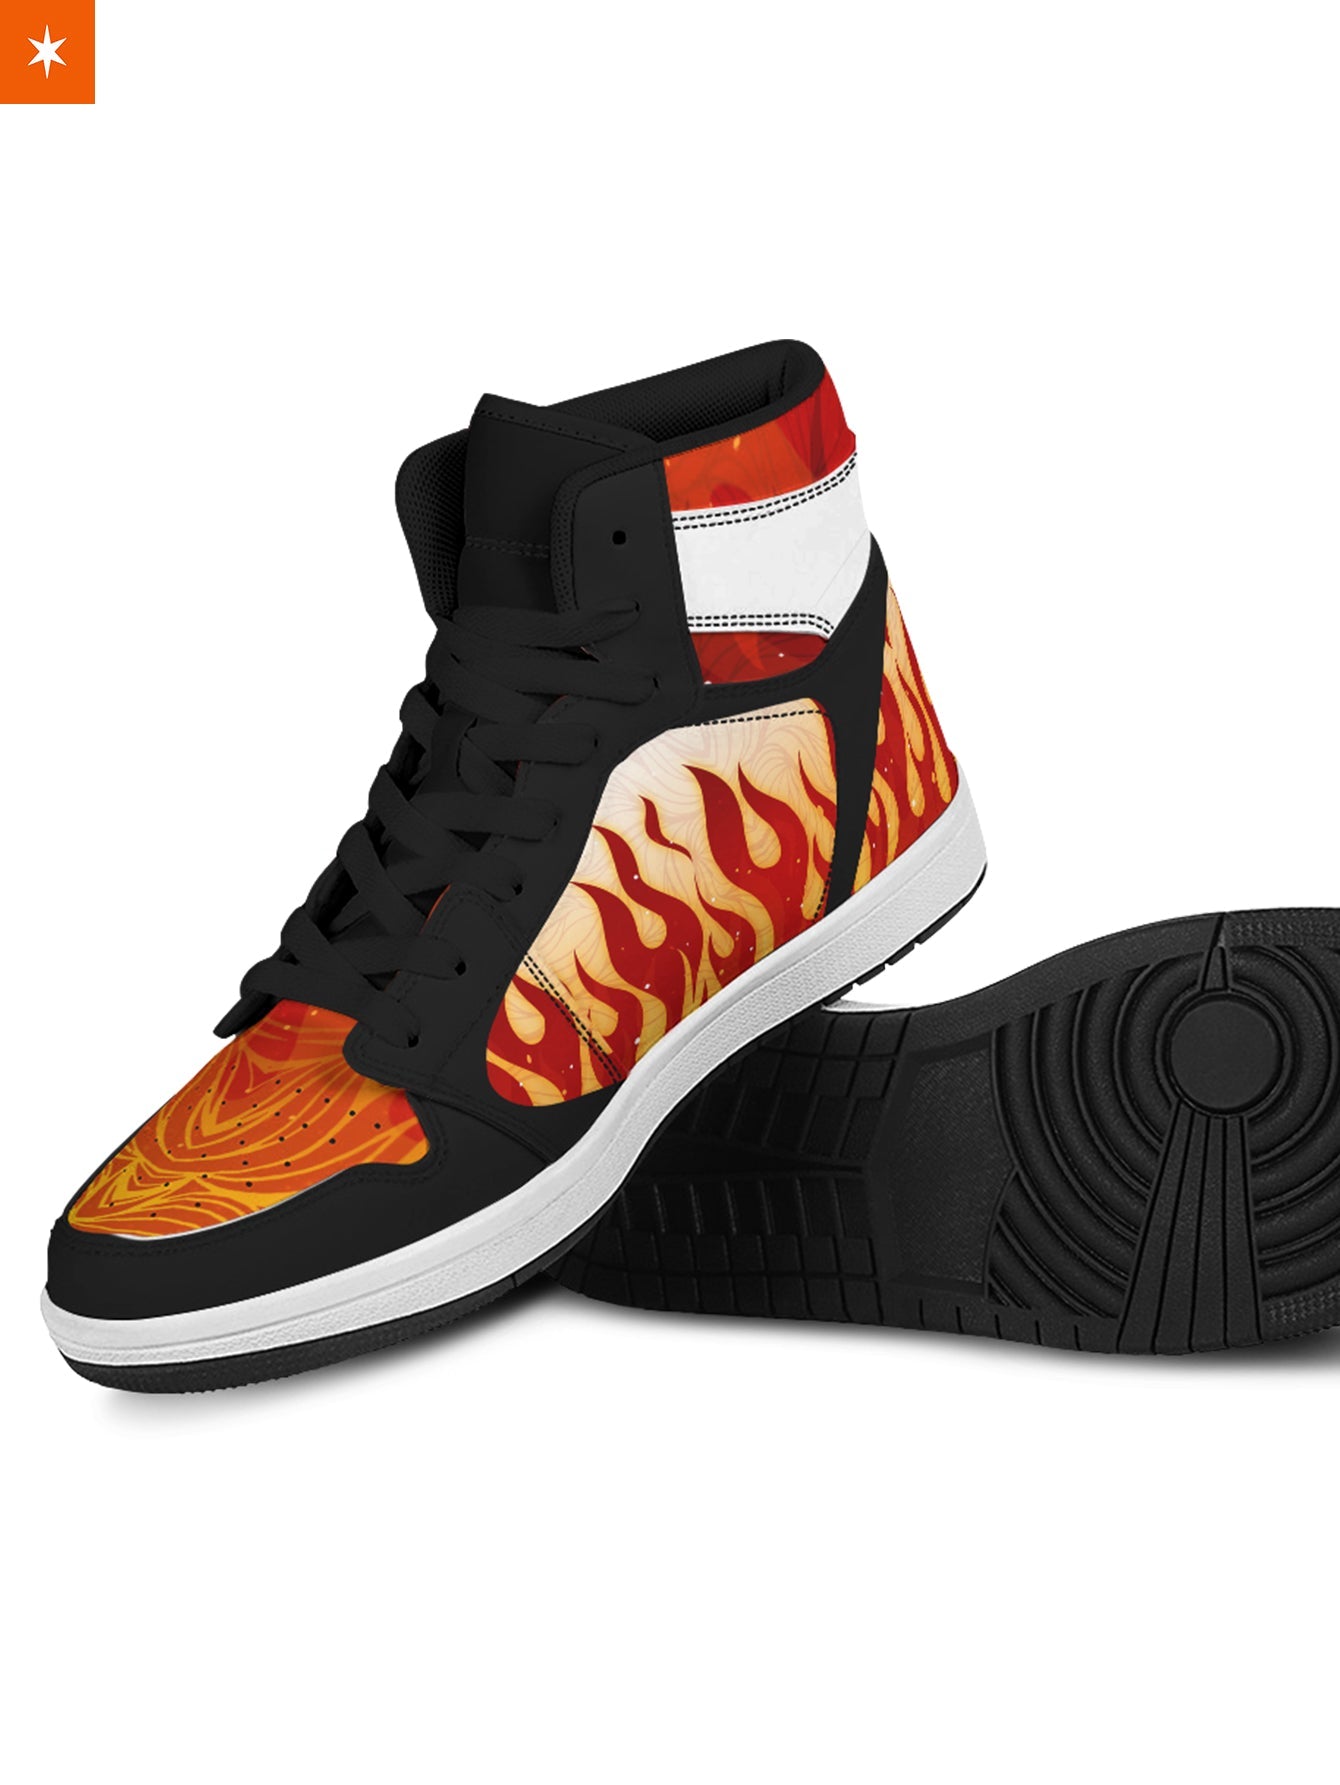 Fandomaniax - Rengoku Fire Skill JD Sneakers